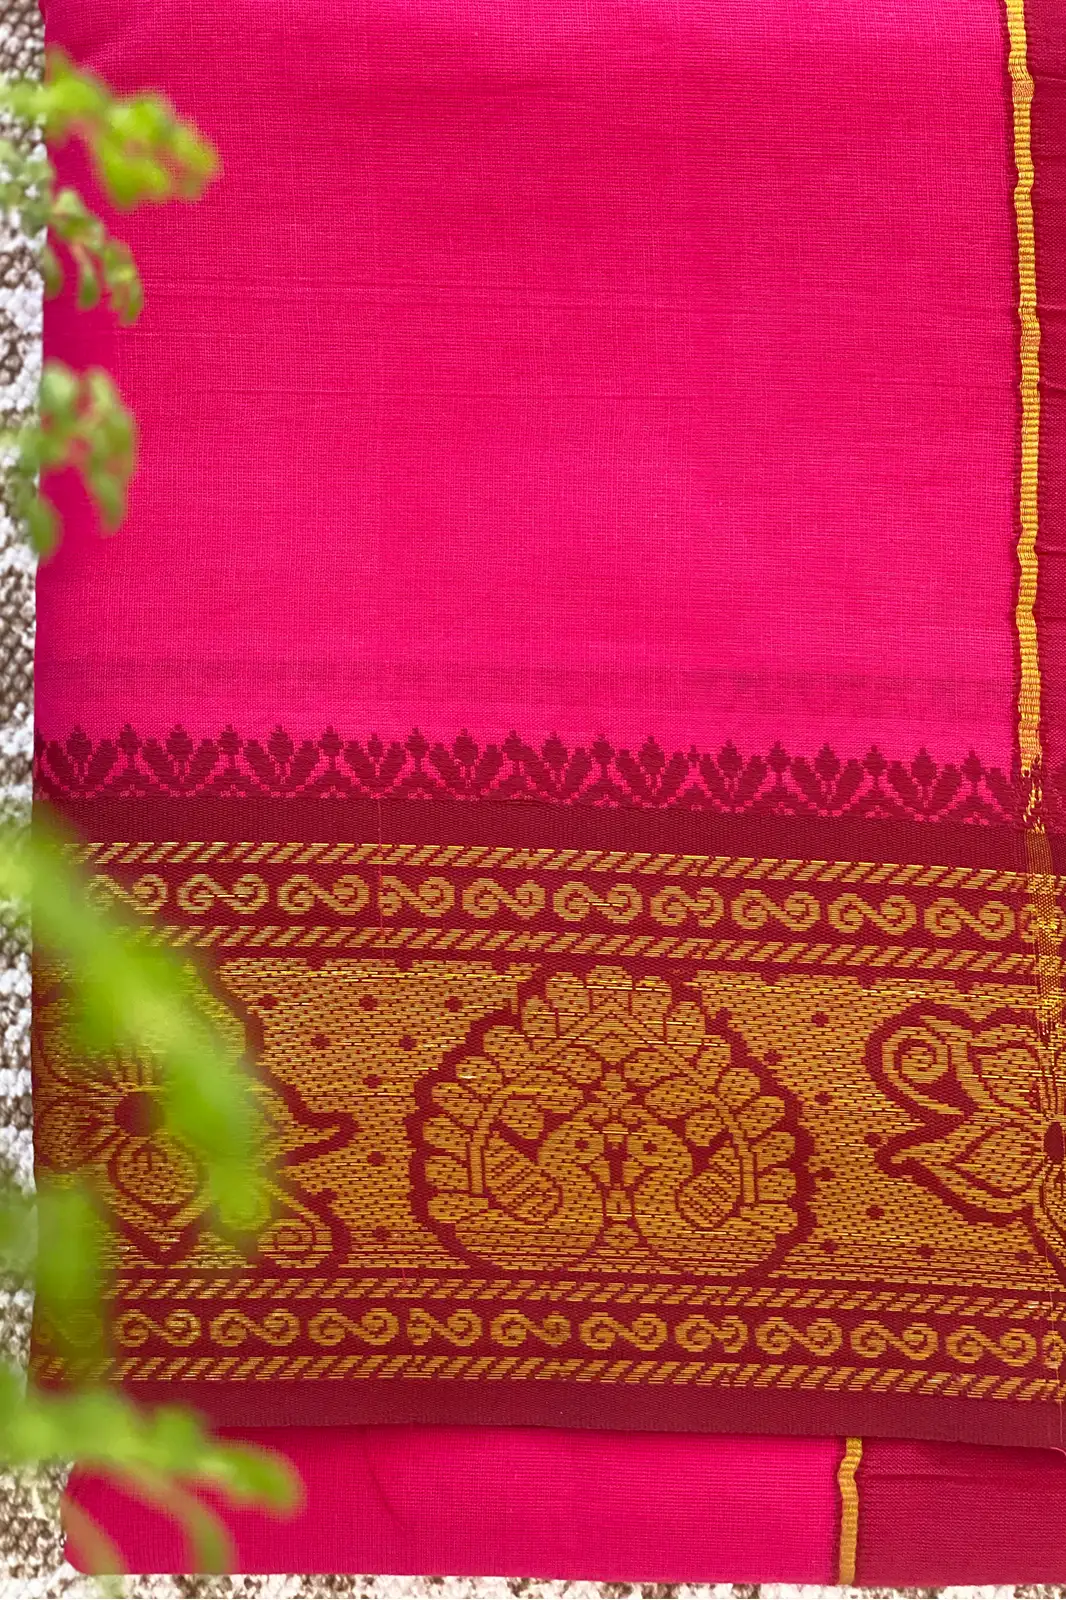 sodoaq pink cotton dhoti, organic cotton dhoti, dhoti indian clothing, cotton dhoti, best cotton dhoti, dhoti traditional, eco-friendly clothing store